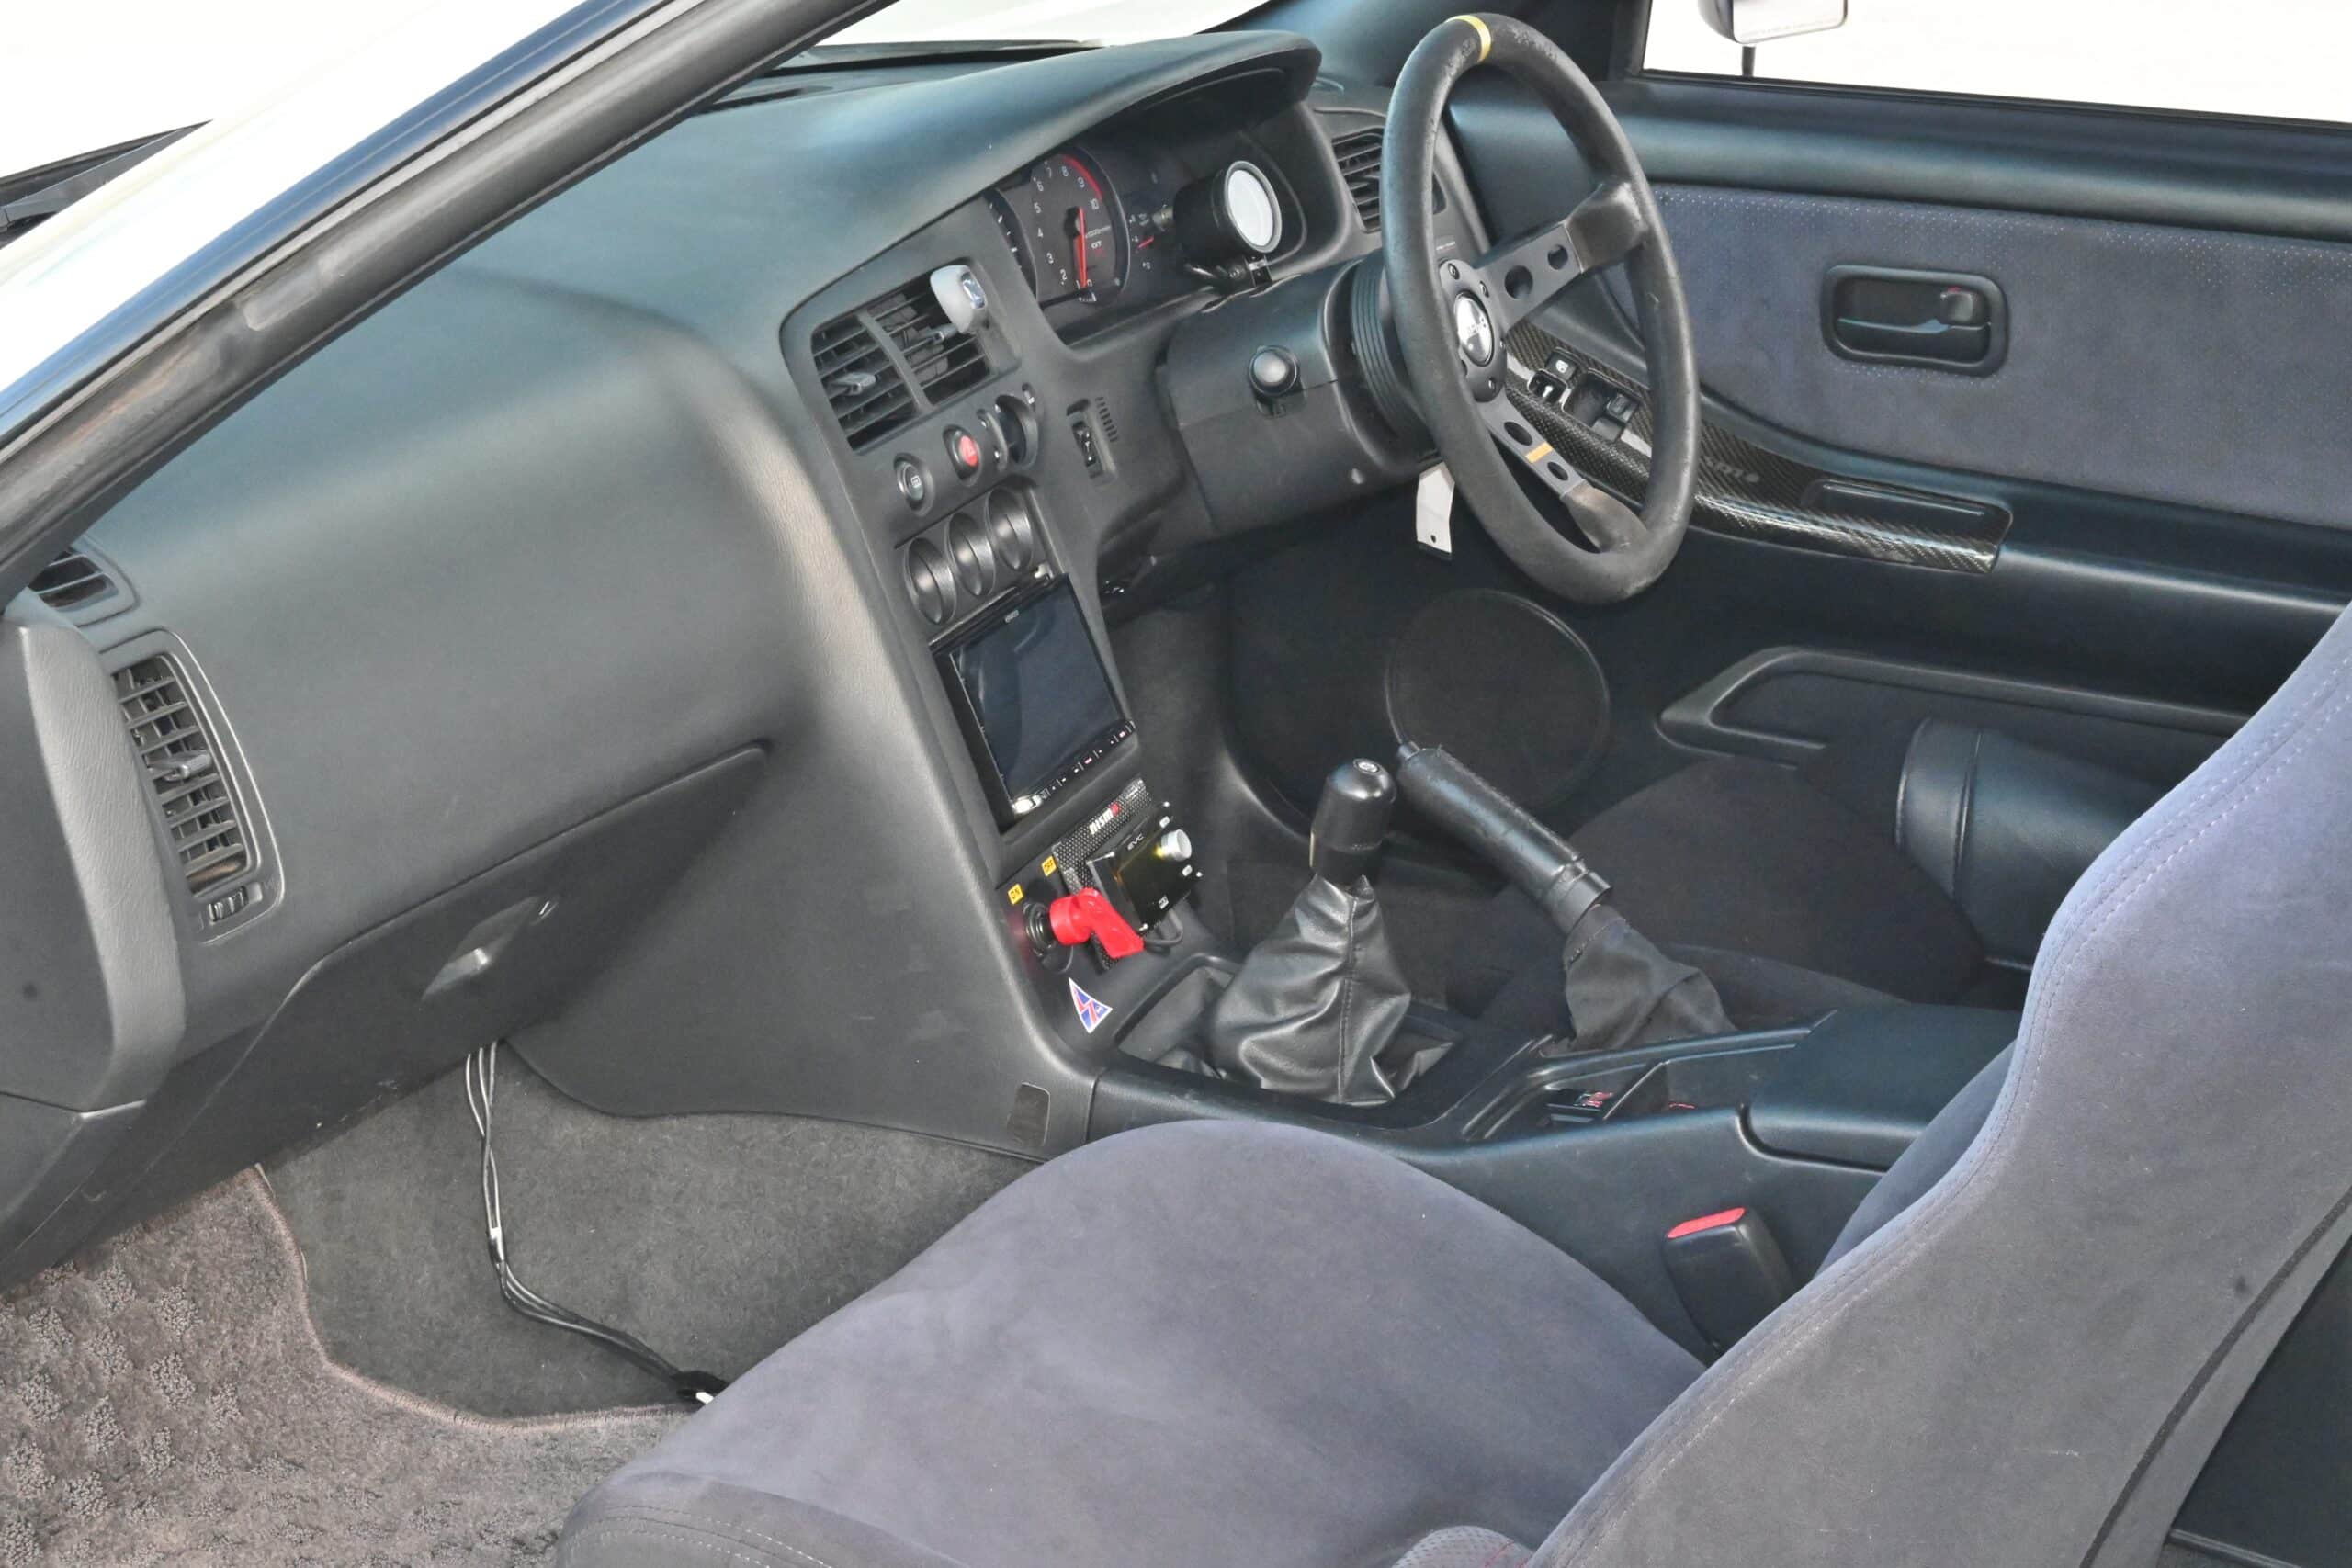 1995 Nissan GT-R Skyline R33 Nismo GT500 styled | 565awhp | Fully Serviced | Federally Legal